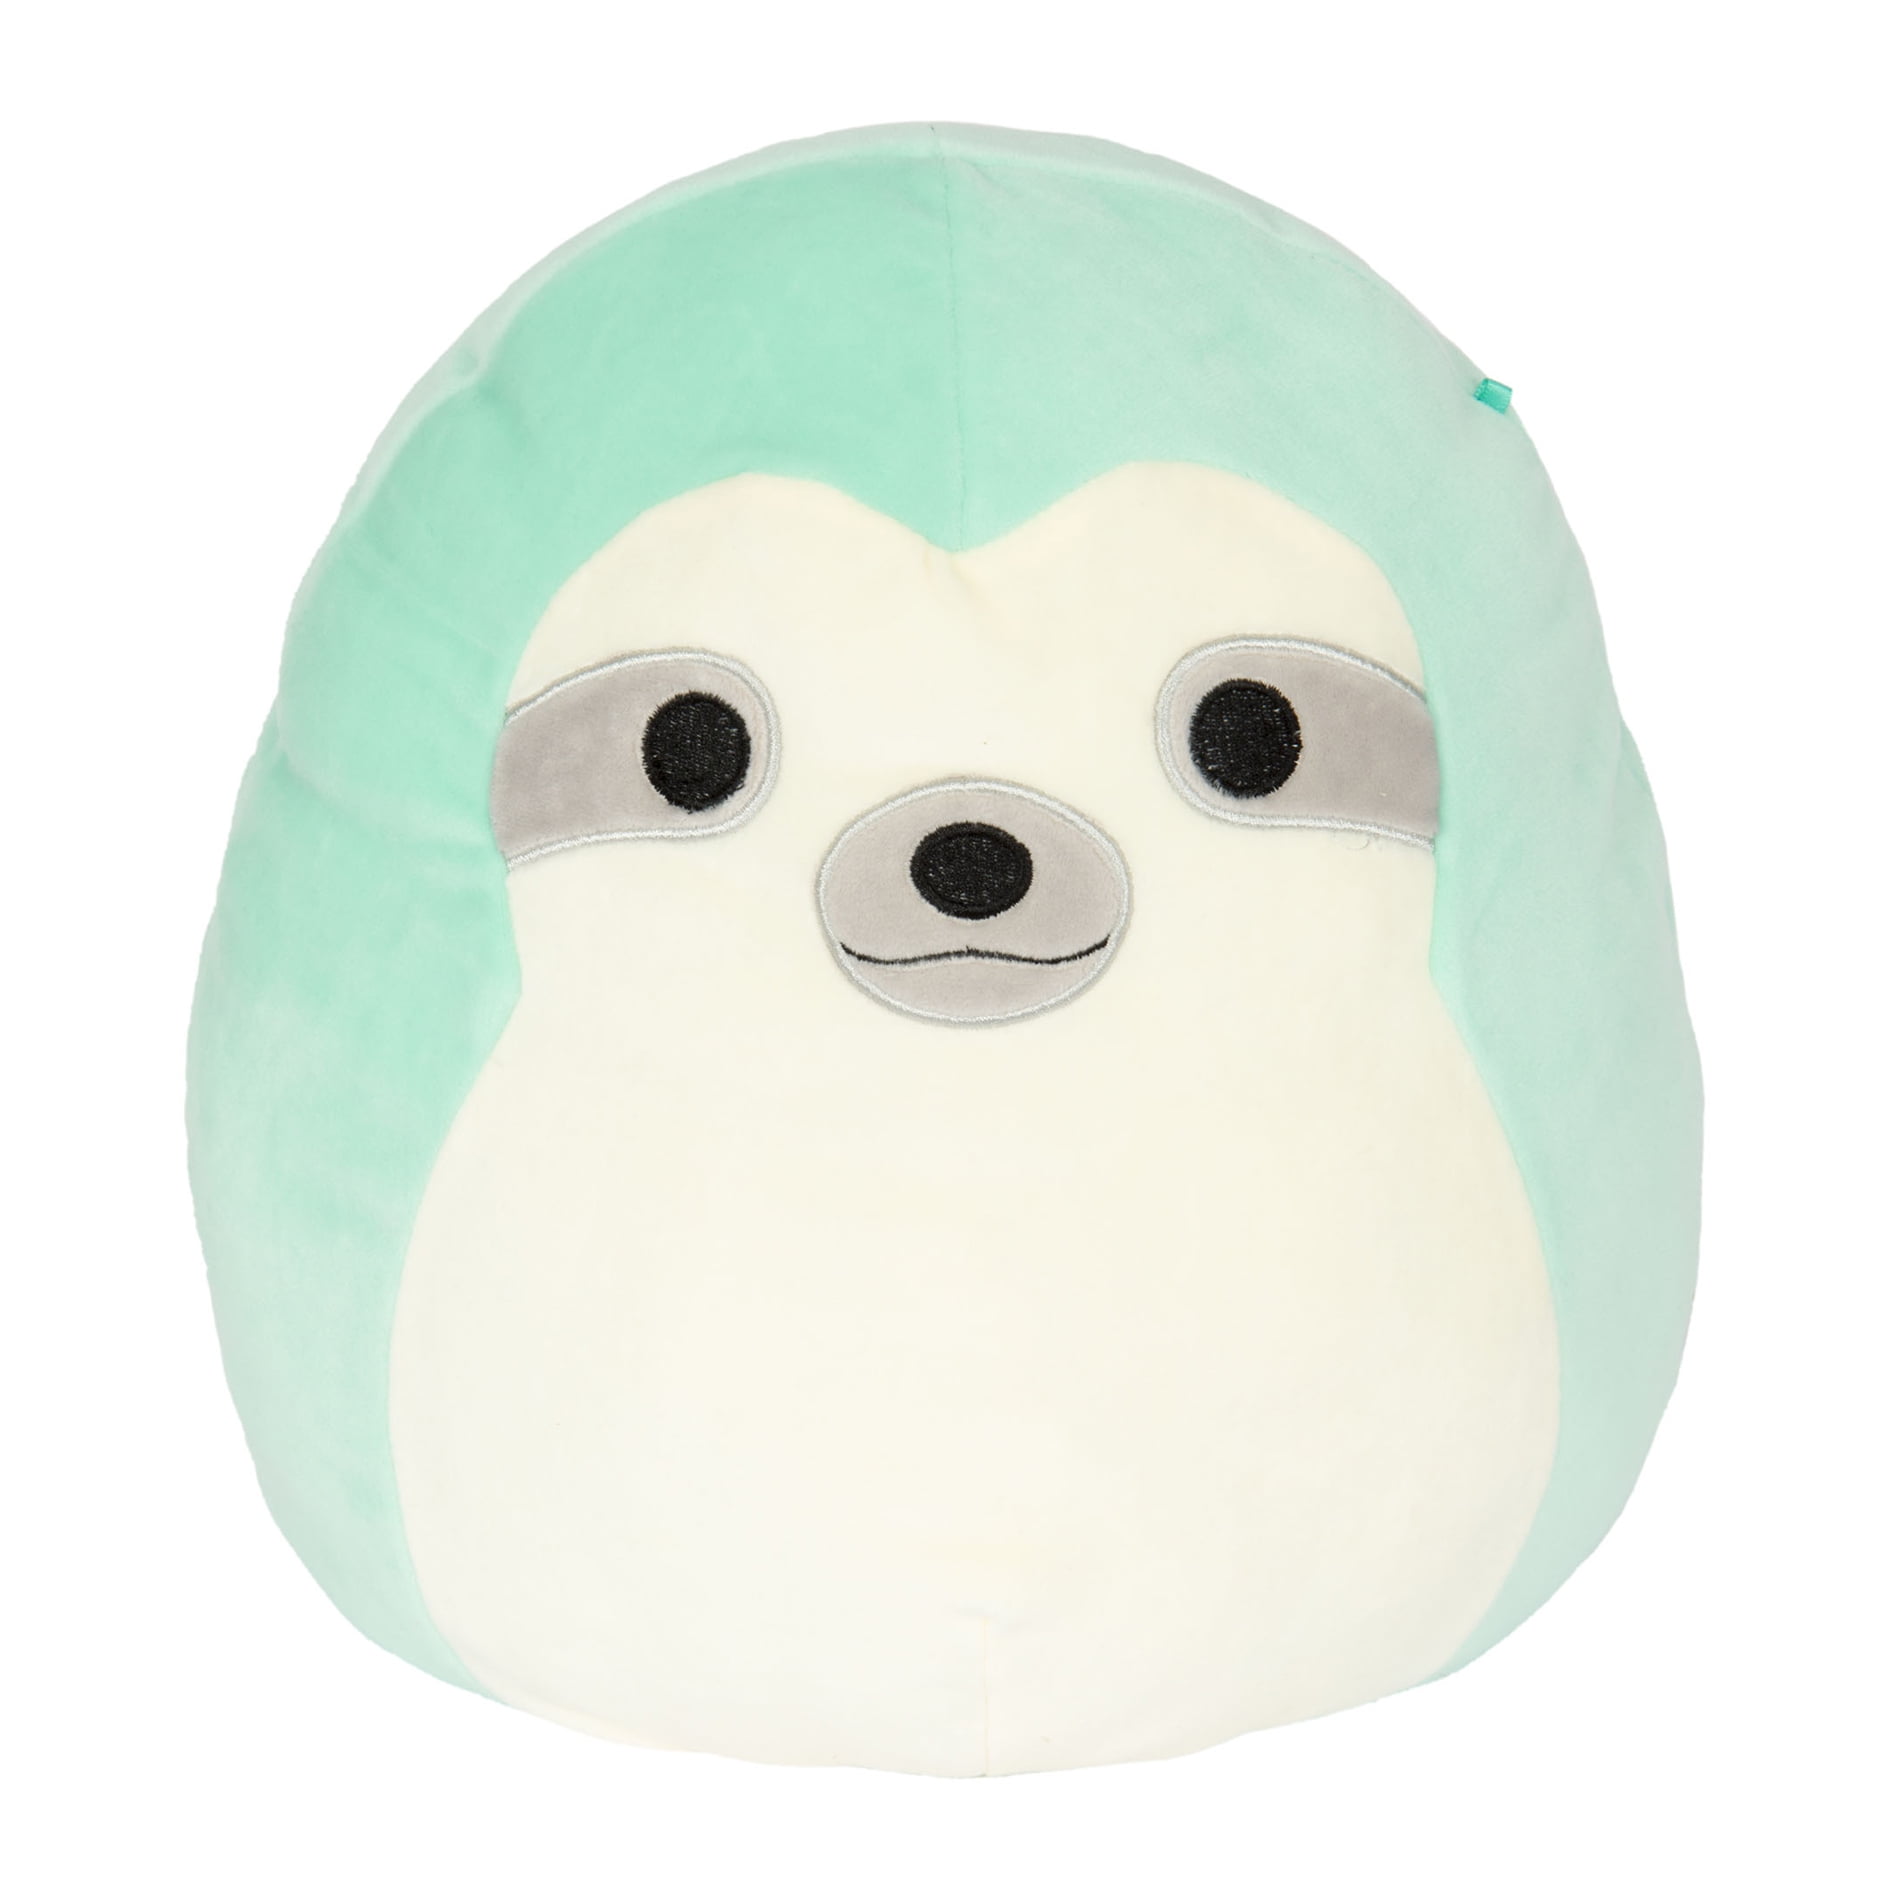 Kellytoy 12” Squishmallow Aqua the Teal Sloth NWT Plush Doll AUTHENTIC